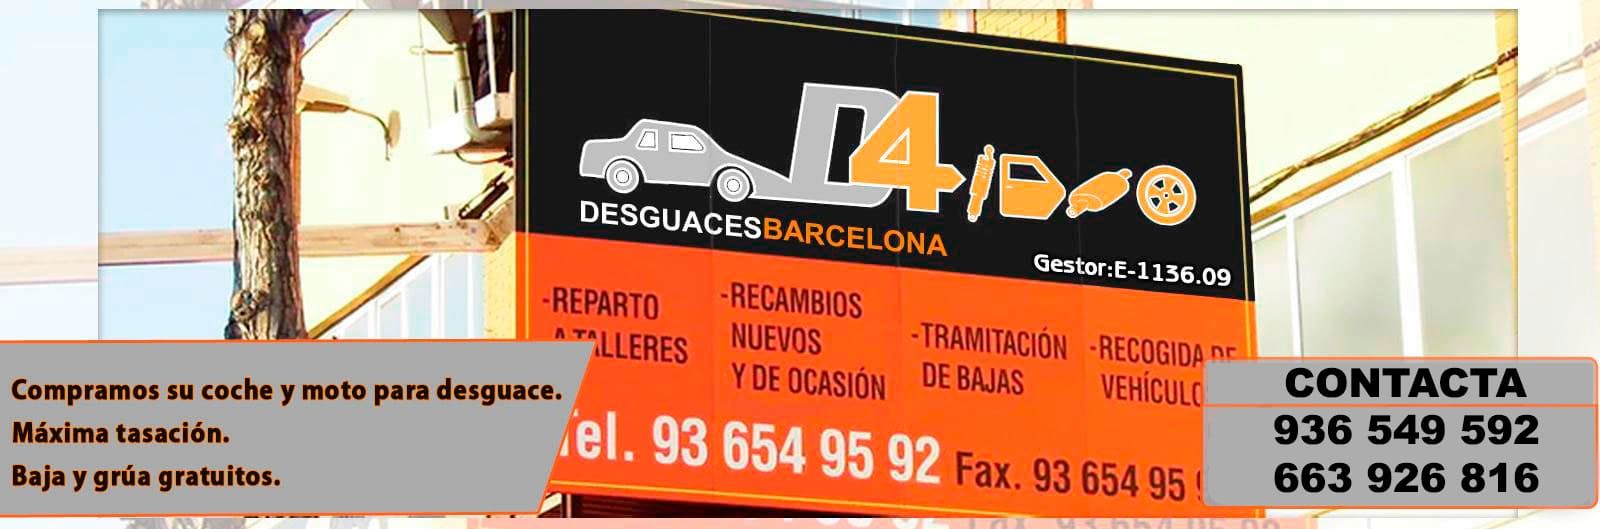 Desguace Barcelona cartel publicitario